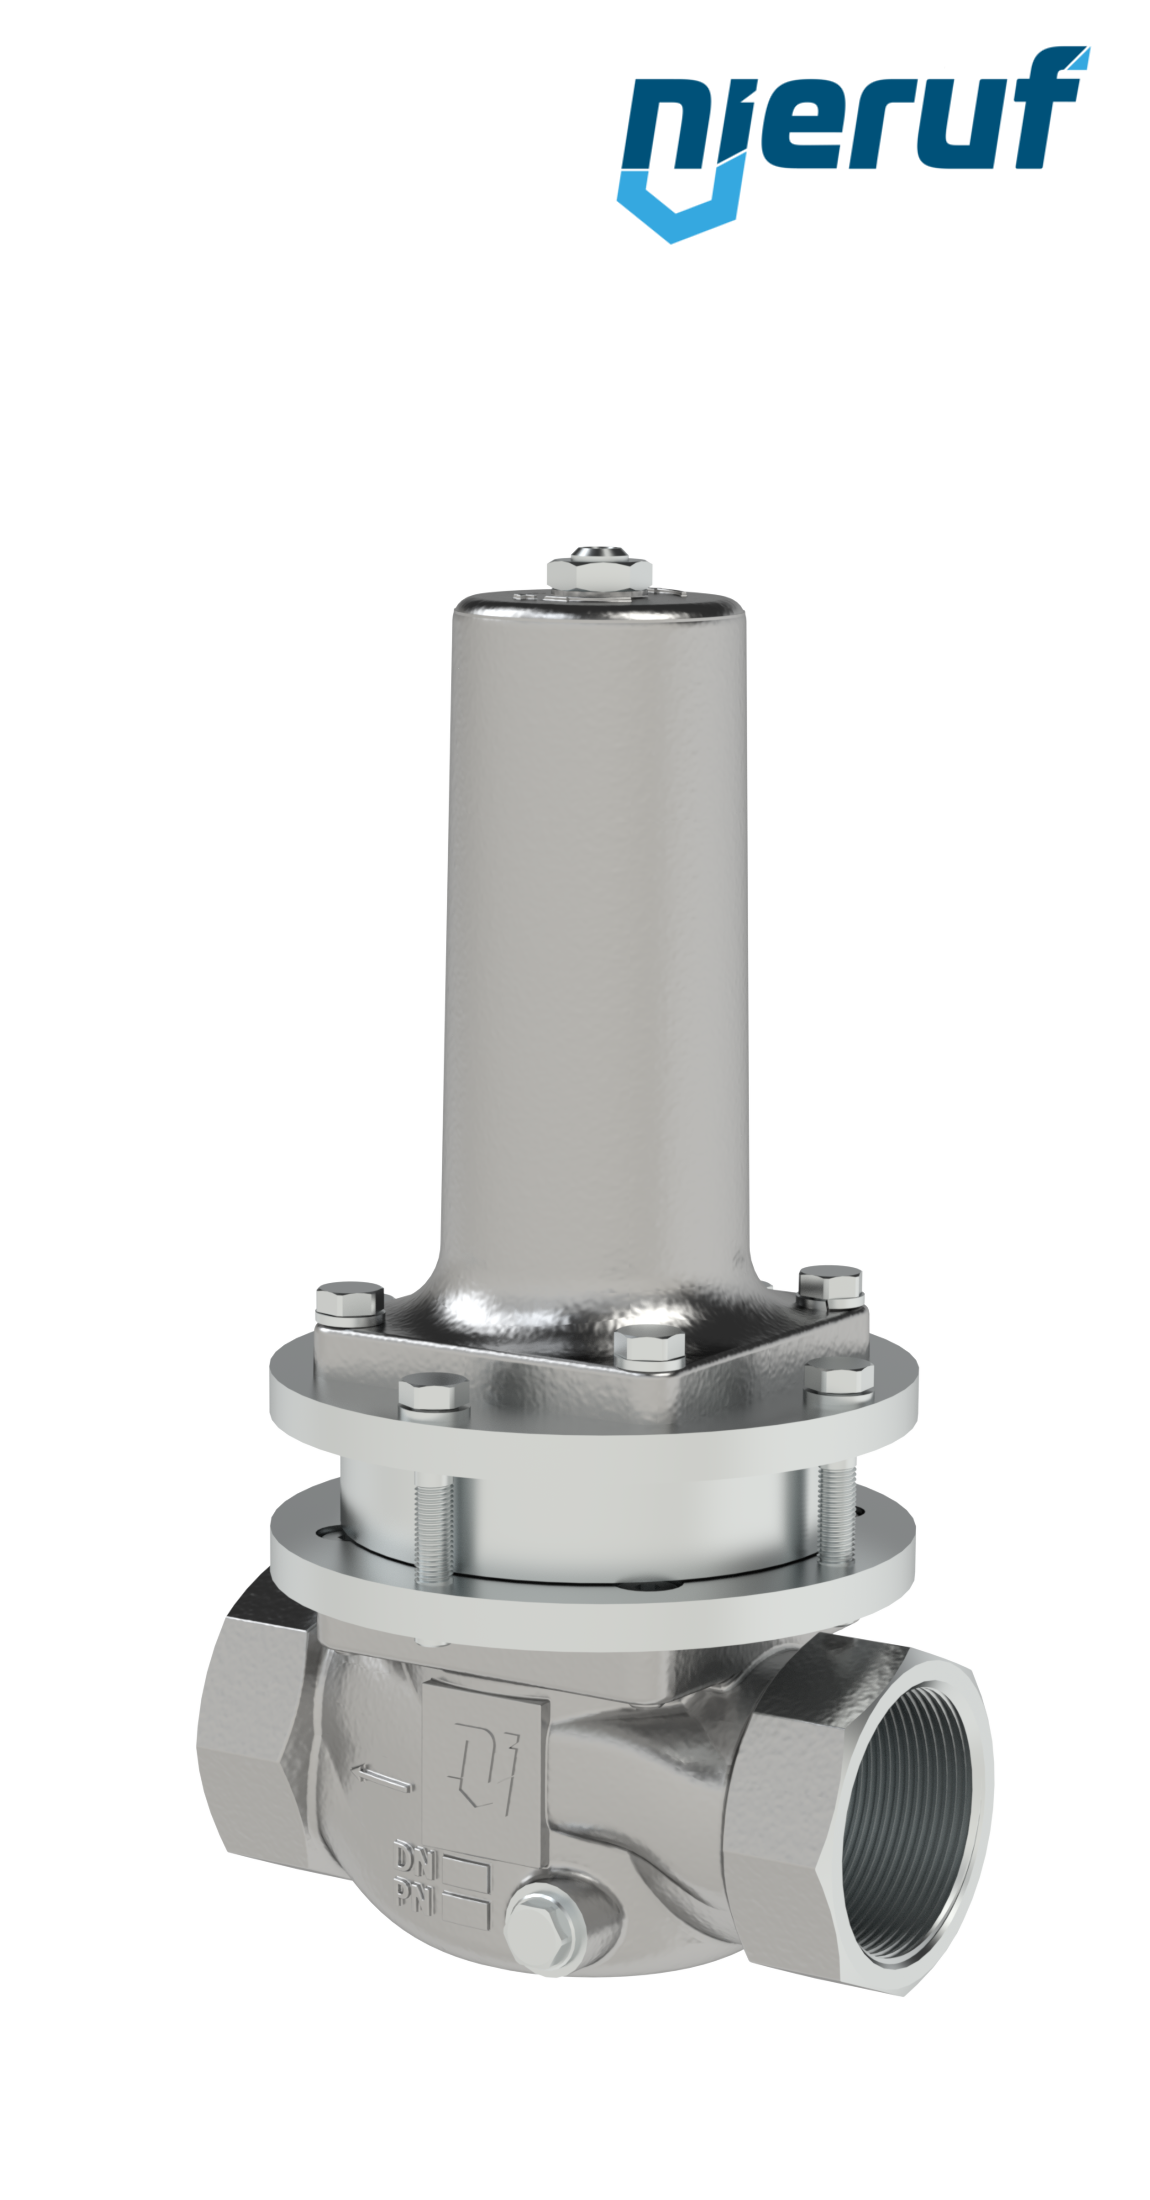 steam pressure reducing valve low pressure 2" Inch DM21 stainless steel PTFE / EPDM / FEPM 0.3 - 2.0 bar